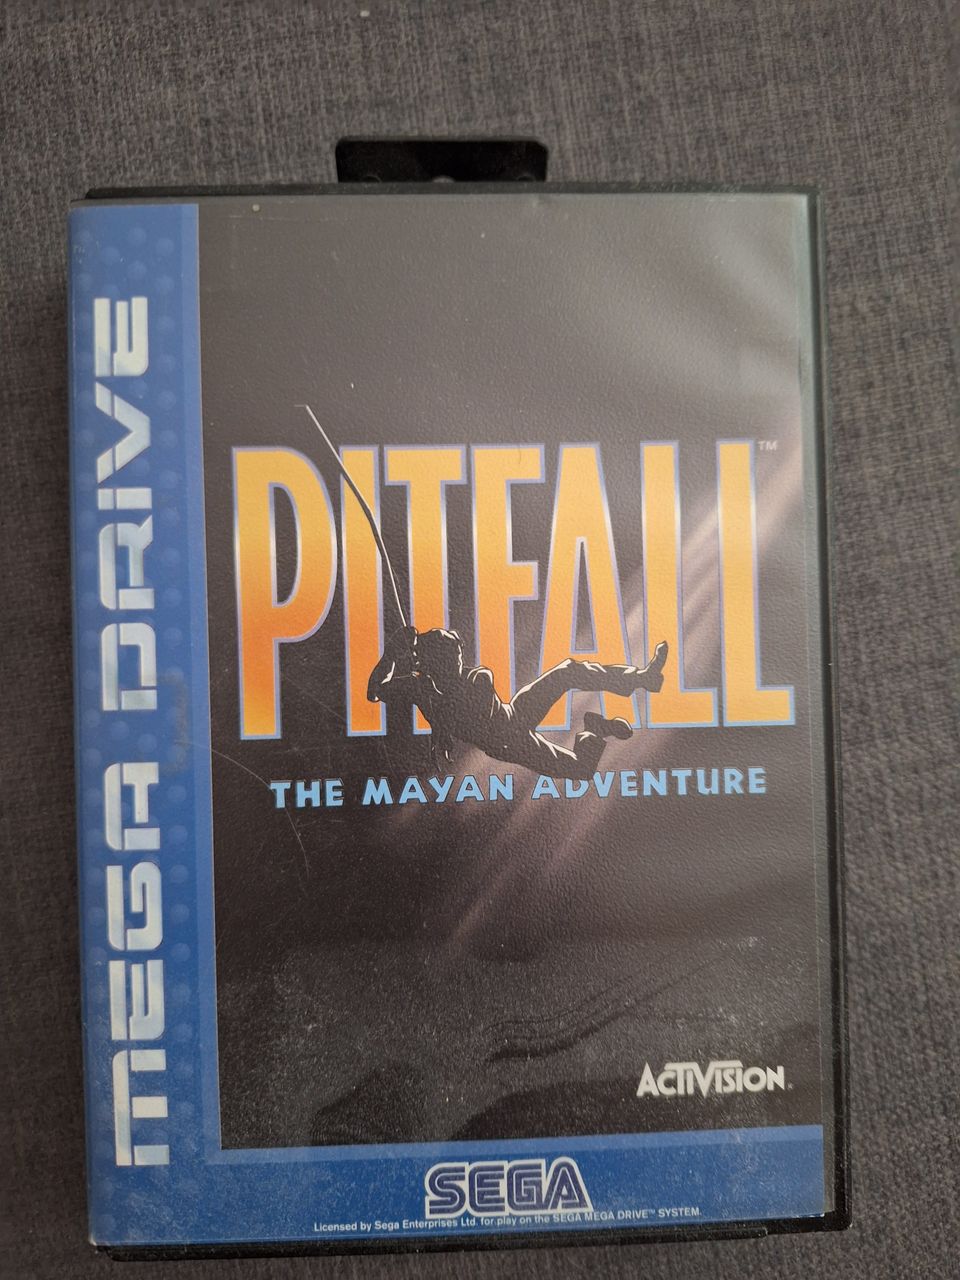 Pitfall the Mayan adventure (Sega mega drive)